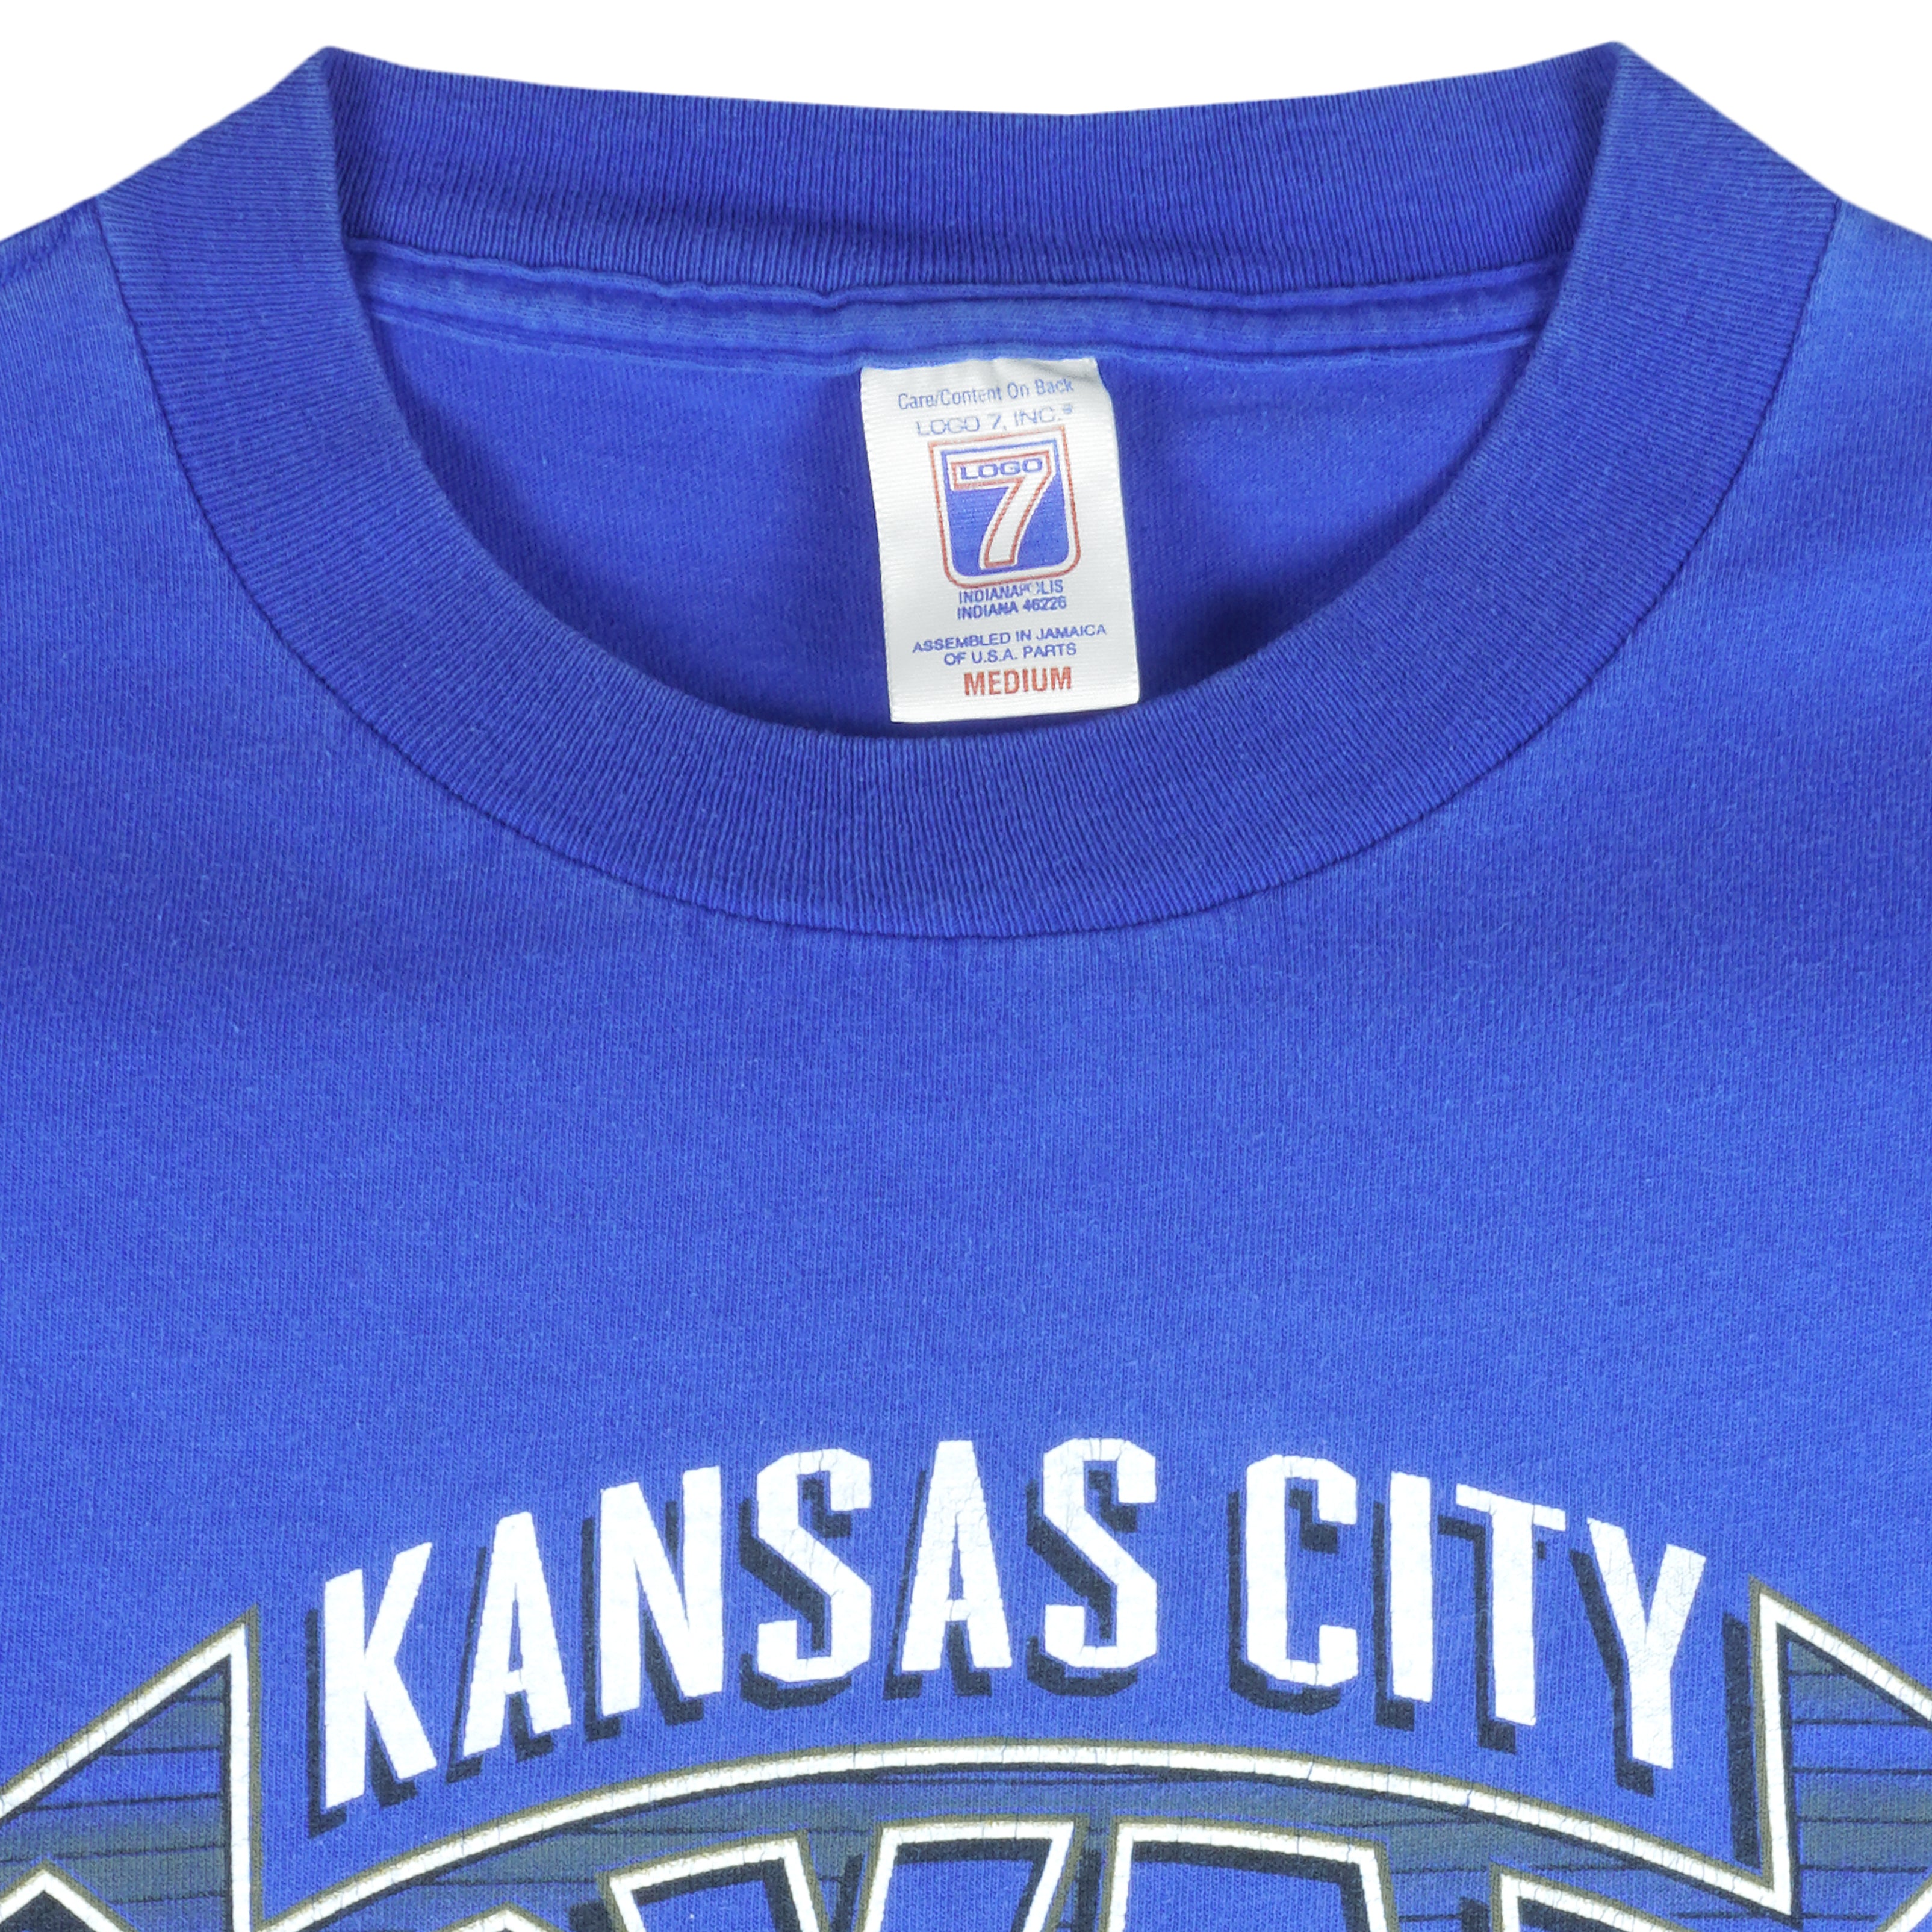 Kansas City Royals Stitches Youth Combo T-Shirt Set - Royal/White